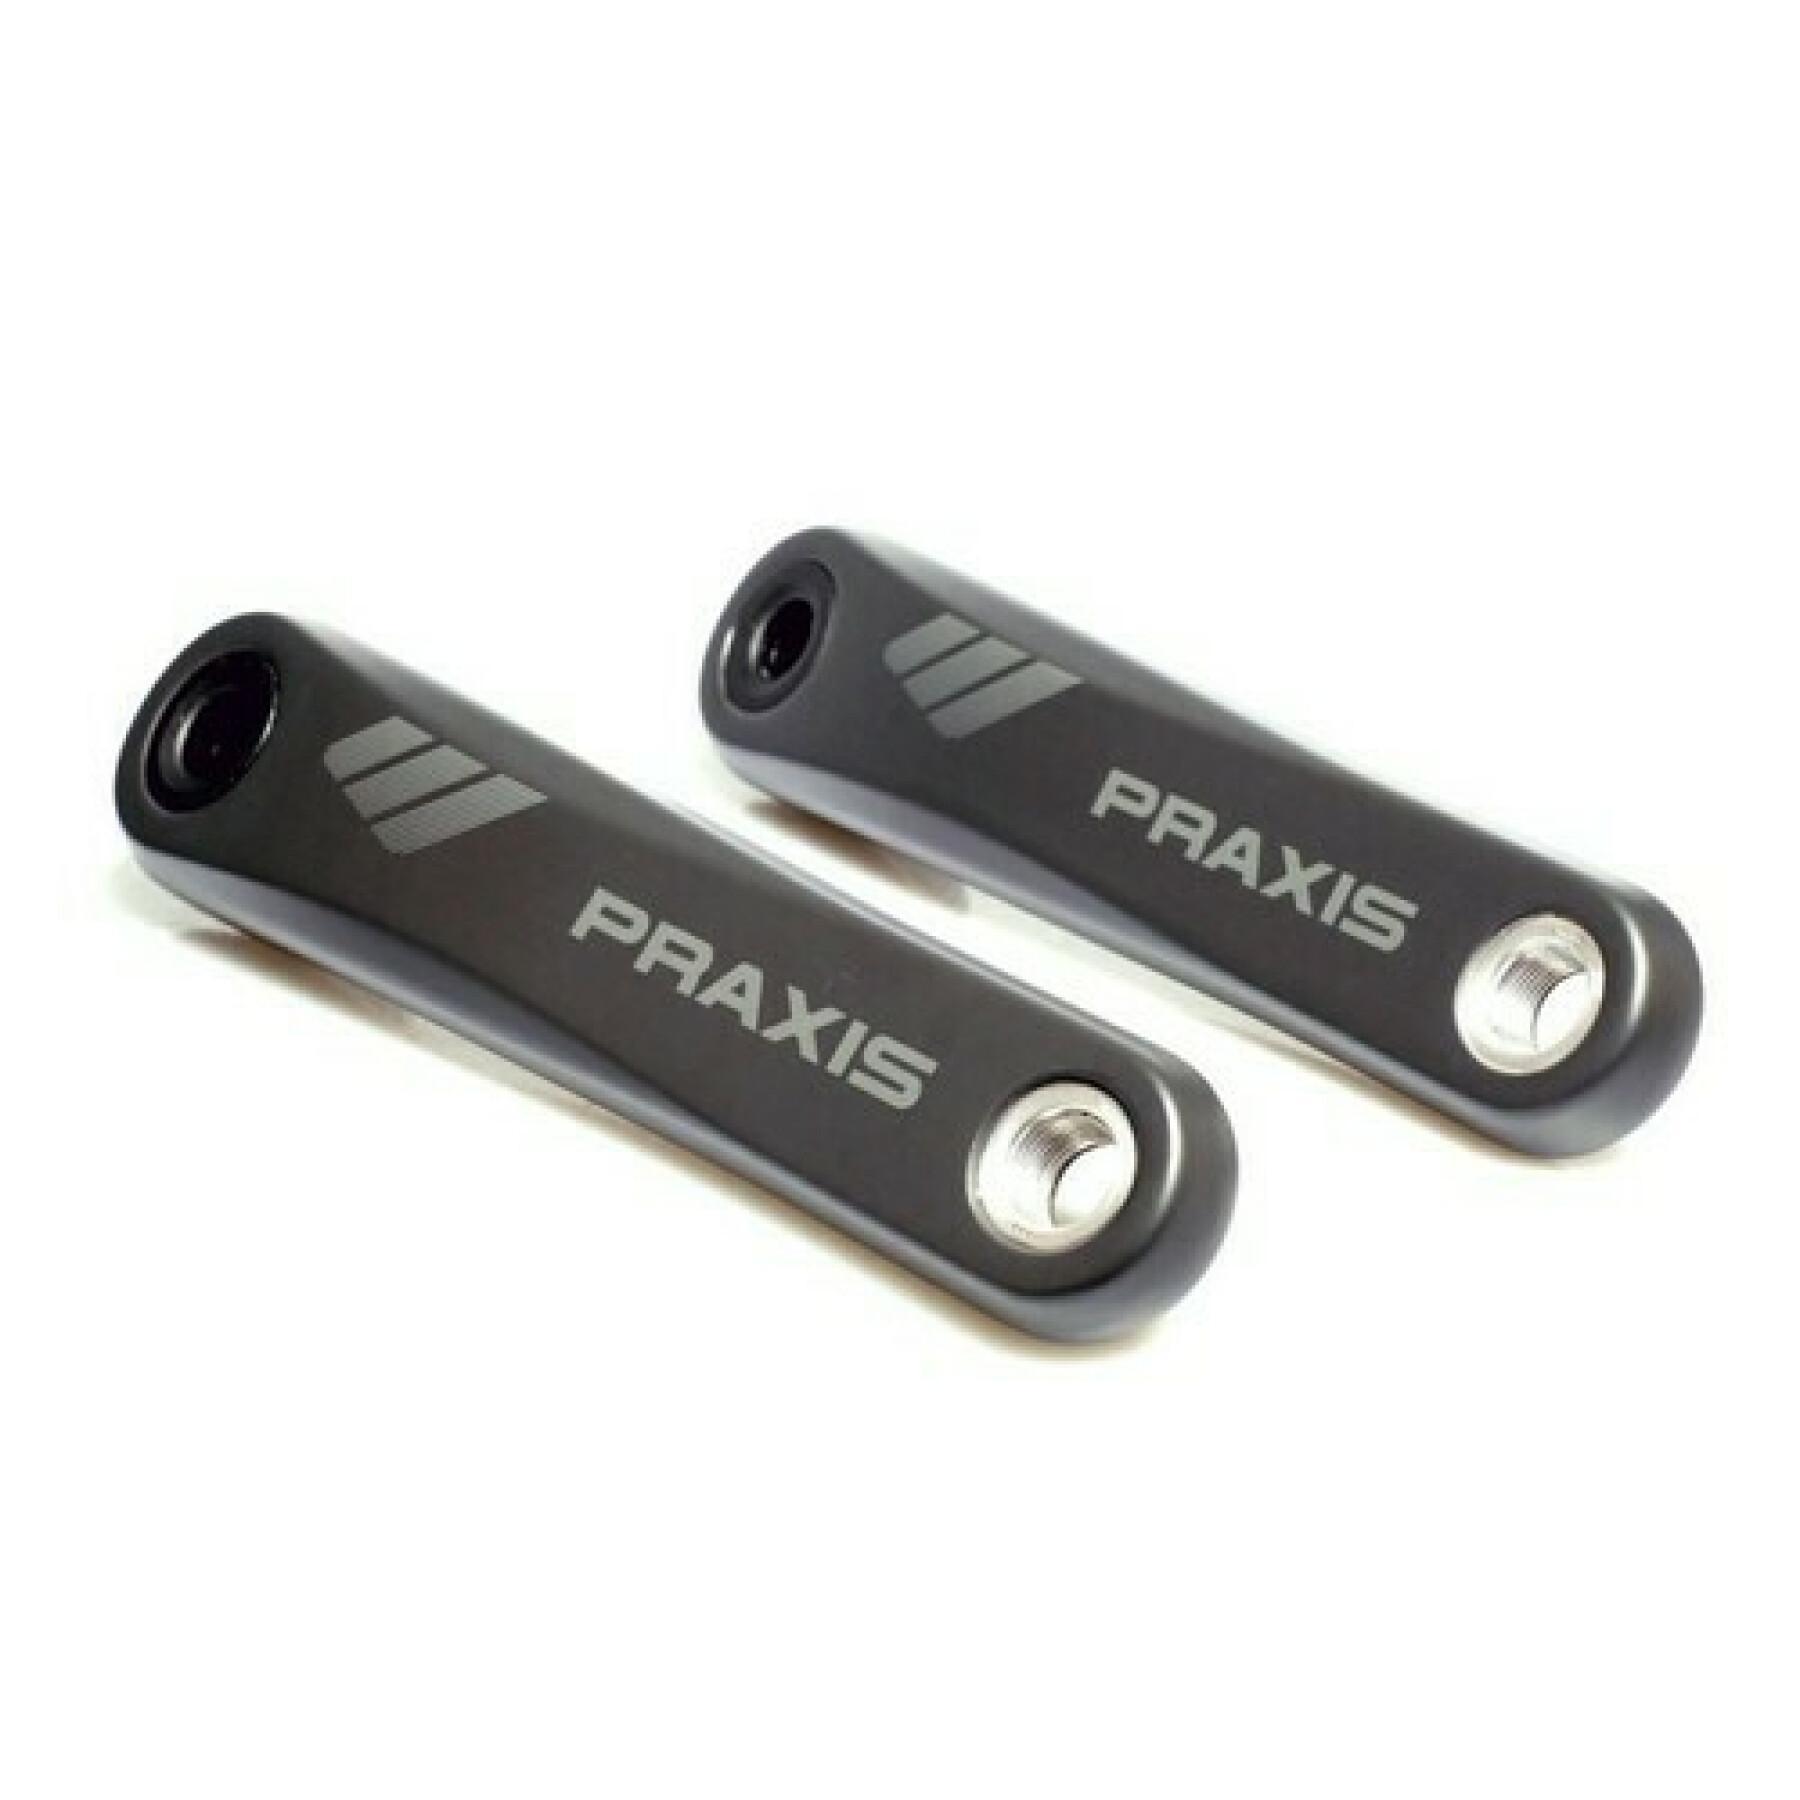 Pedals Praxis eCrank carbon Specialized Brose